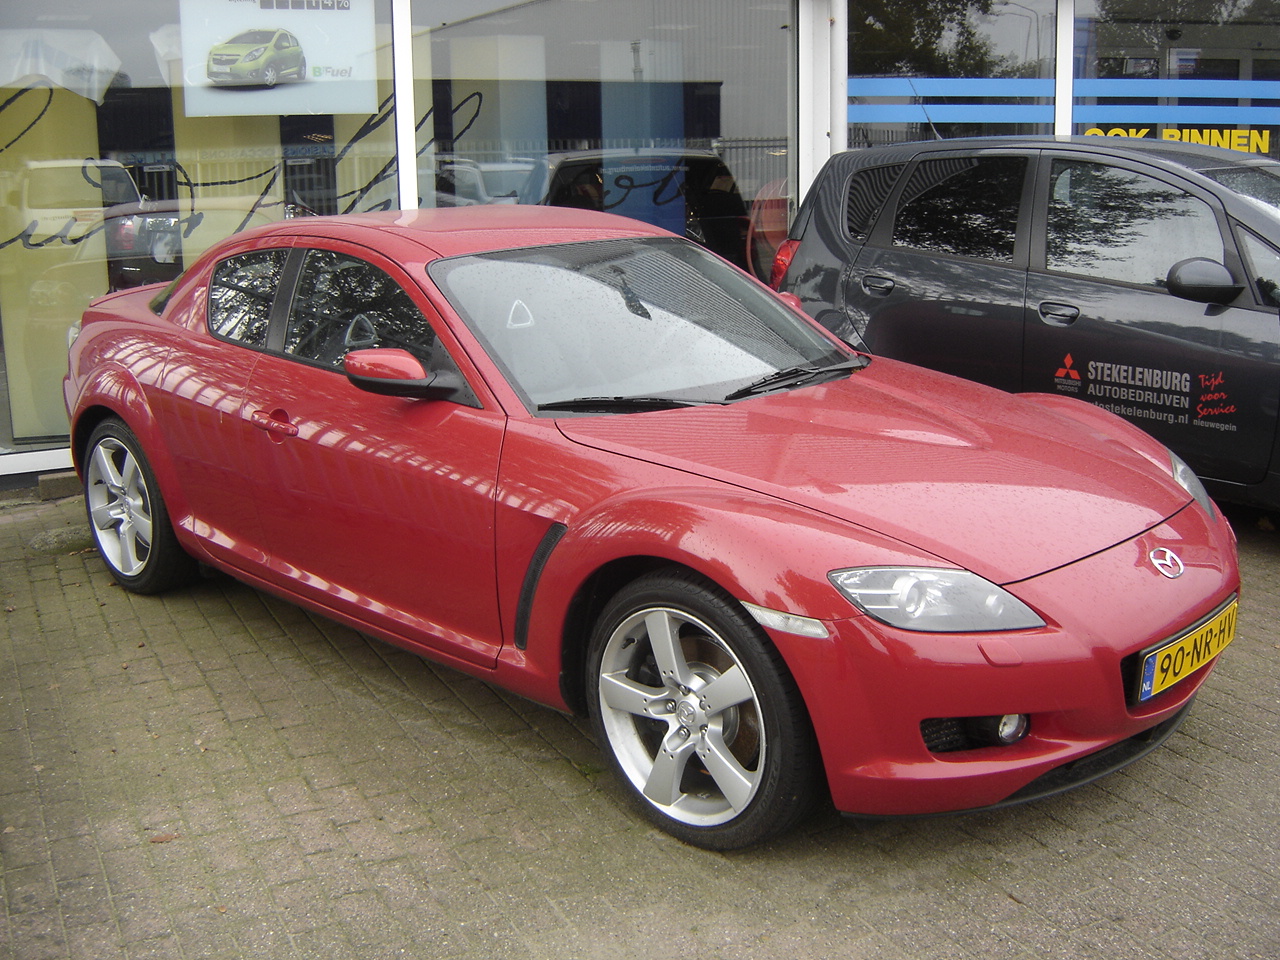 Nieuwegein: 2004 Mazda RX-8 | Flickr - Photo Sharing!